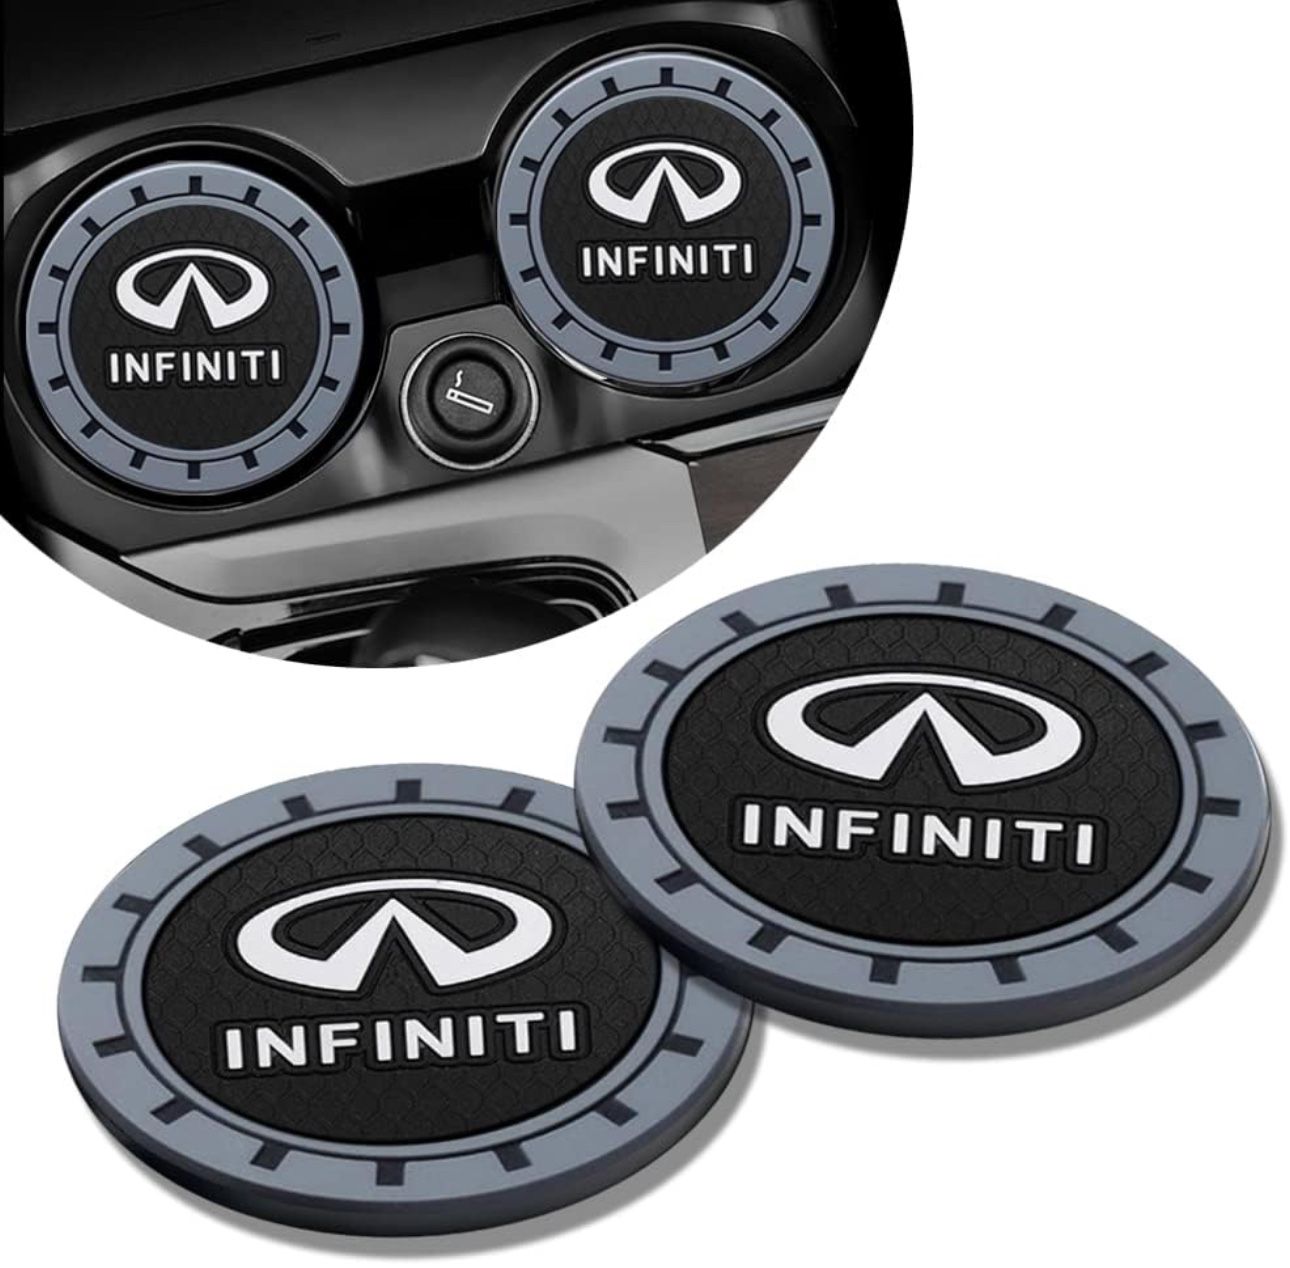 2PCS Car Cup Holder Coaster for Infiniti QX50 Q50 Q70 Q70L Q60 QX30 QX60 QX80,Non-Slip Silicone Cup Holder Insert Drink Coaster Universal Cup Pads, 2.